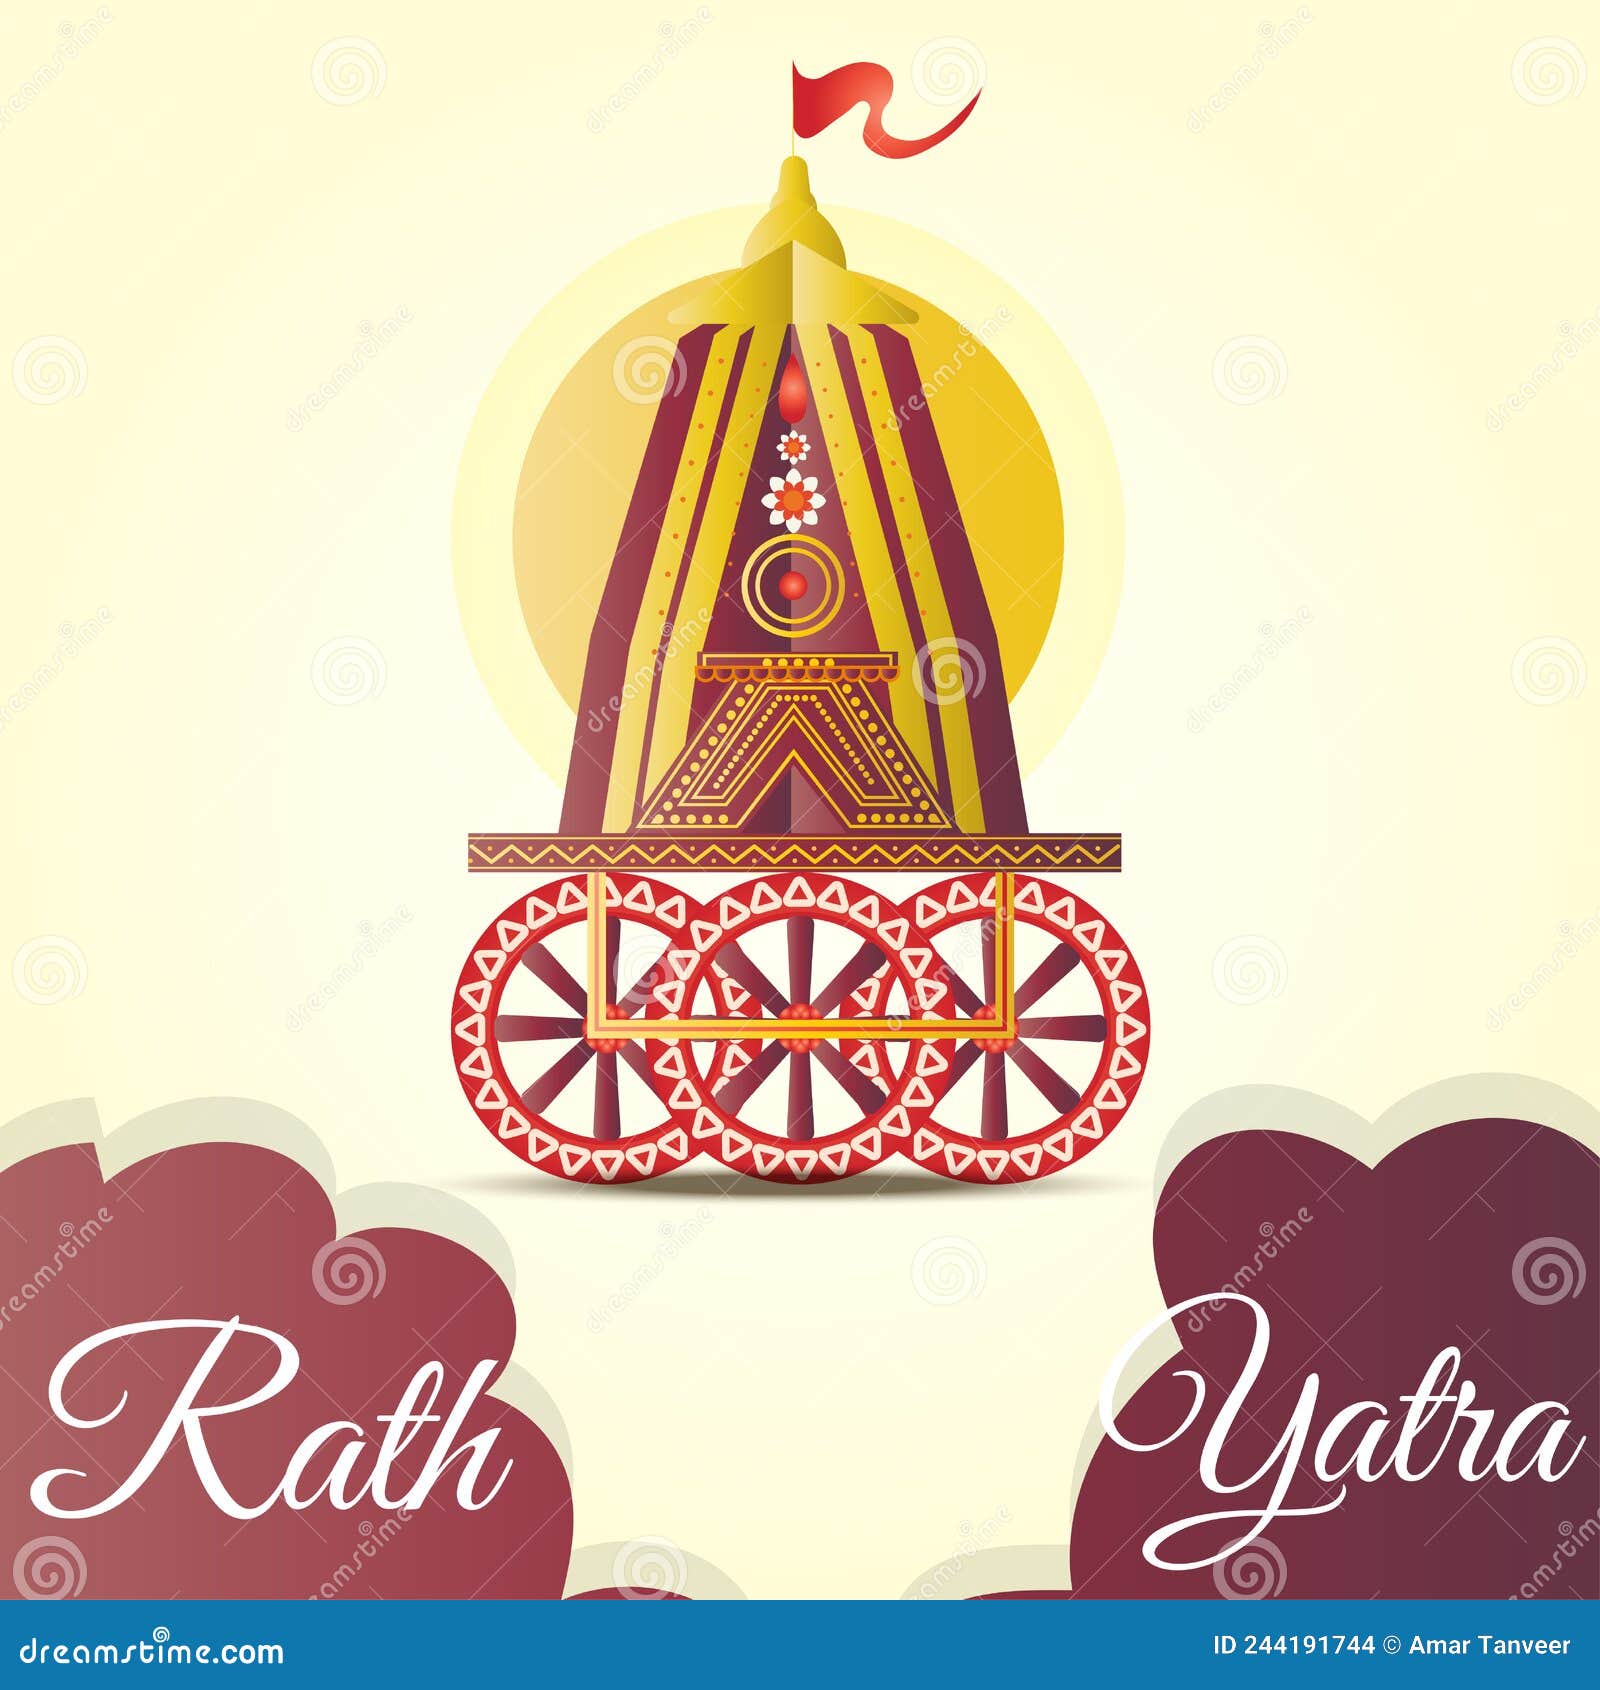 Happy Rath Yatra Jagannath Rathyatra Festival Traditional Cultural Poster  Vector Banner Template Stock Vector - Illustration of chariot, deity:  244191744